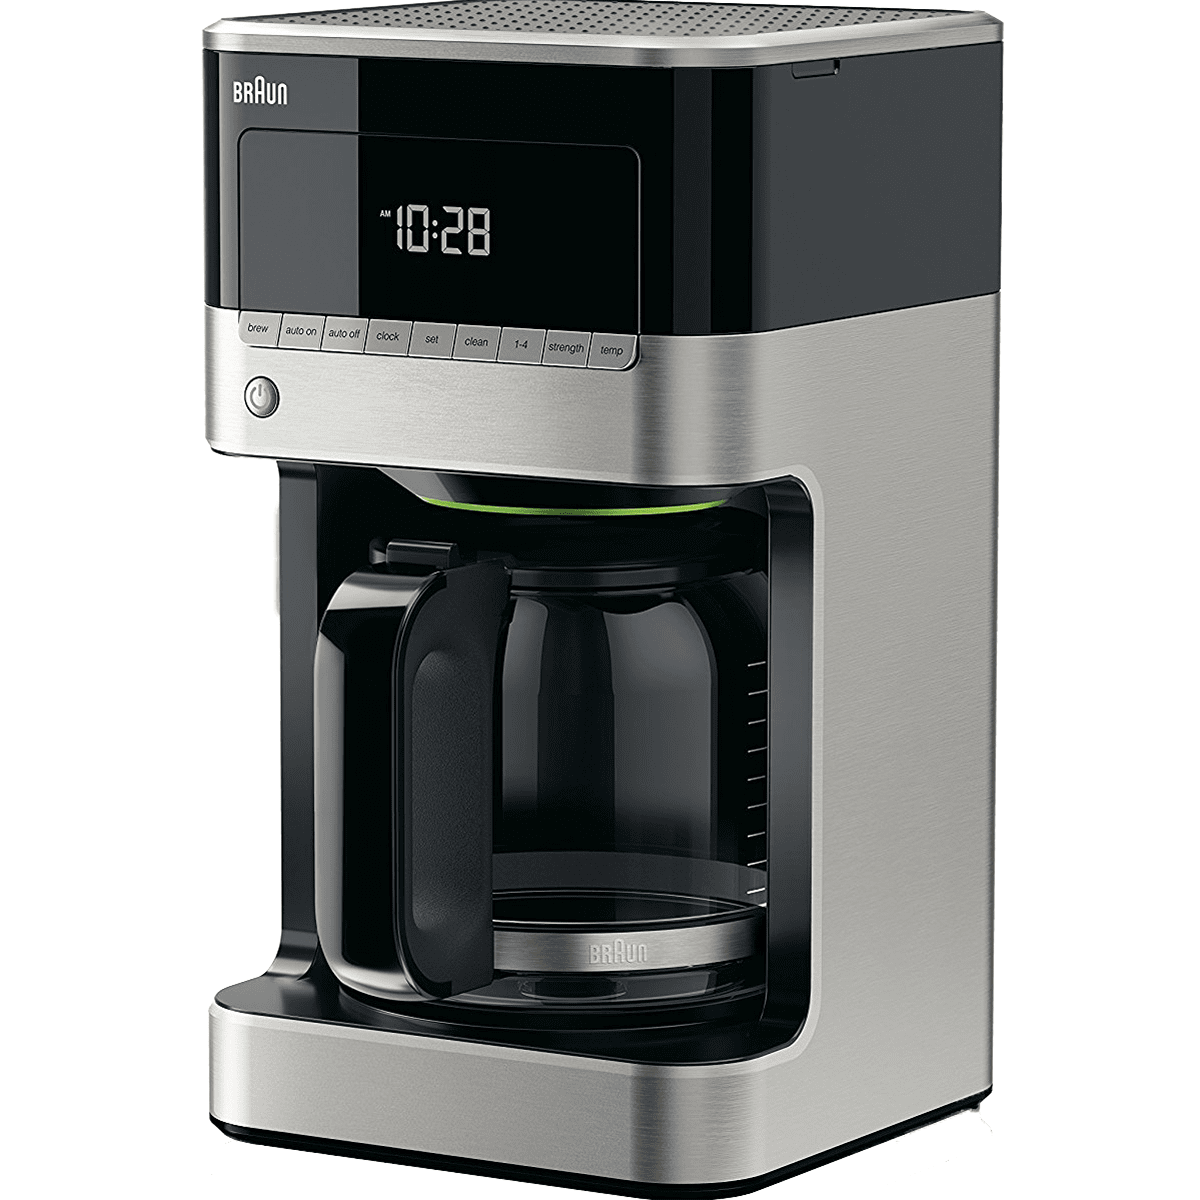 Braun Brewsense 12-cup Drip Coffee Maker - Stainless (kf7150bk)